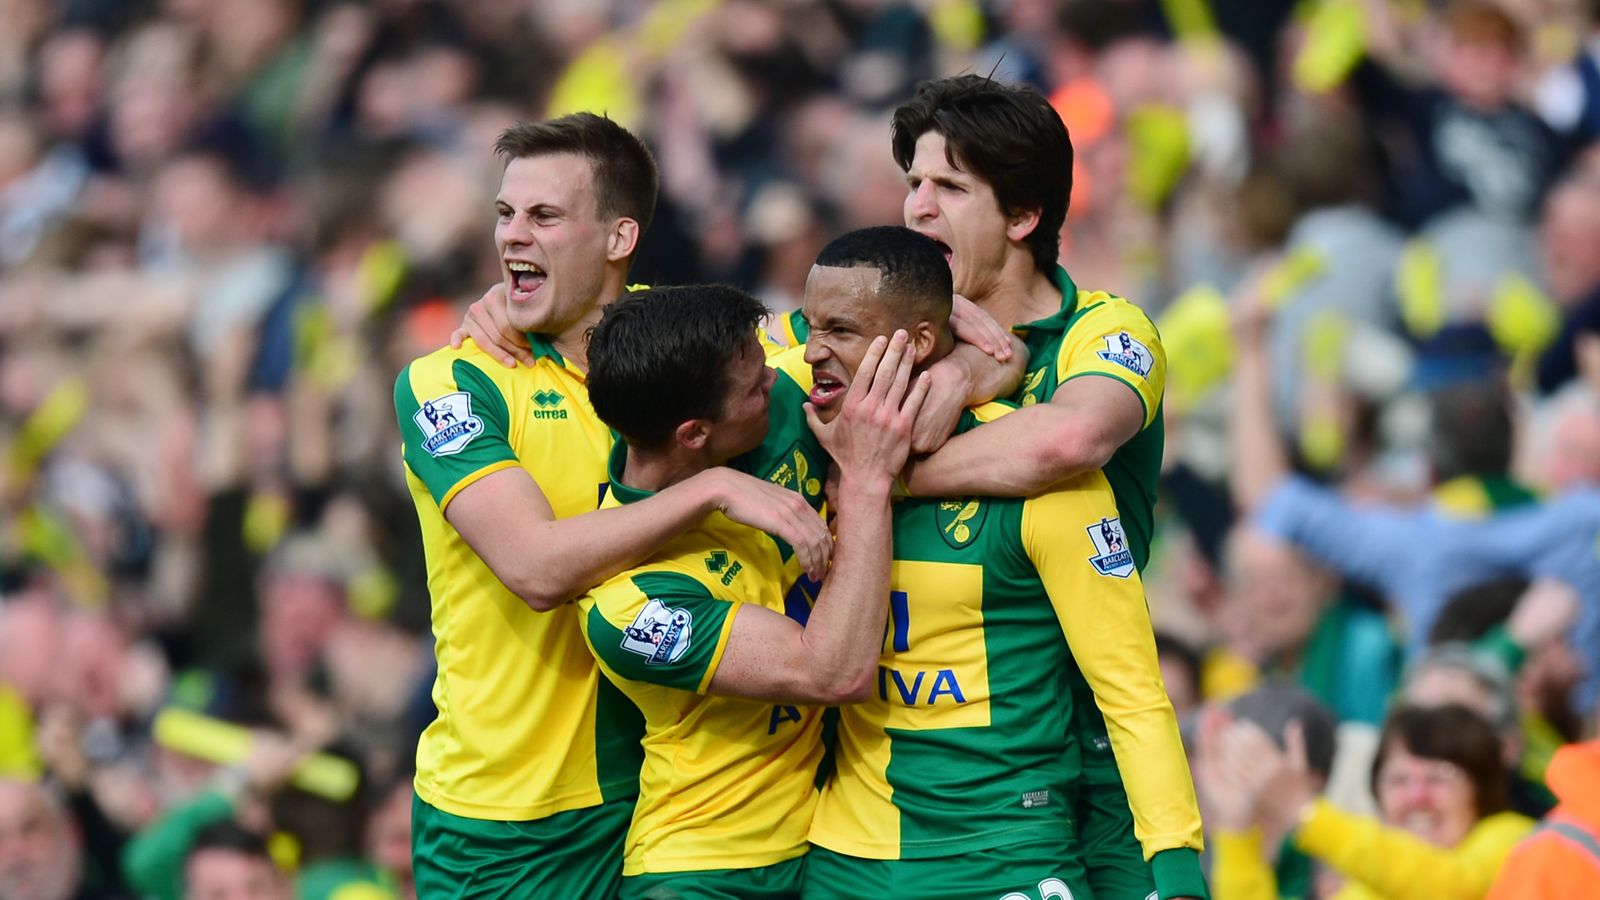 Norwich 3 - 2 Newcastle - Match Report & Highlights